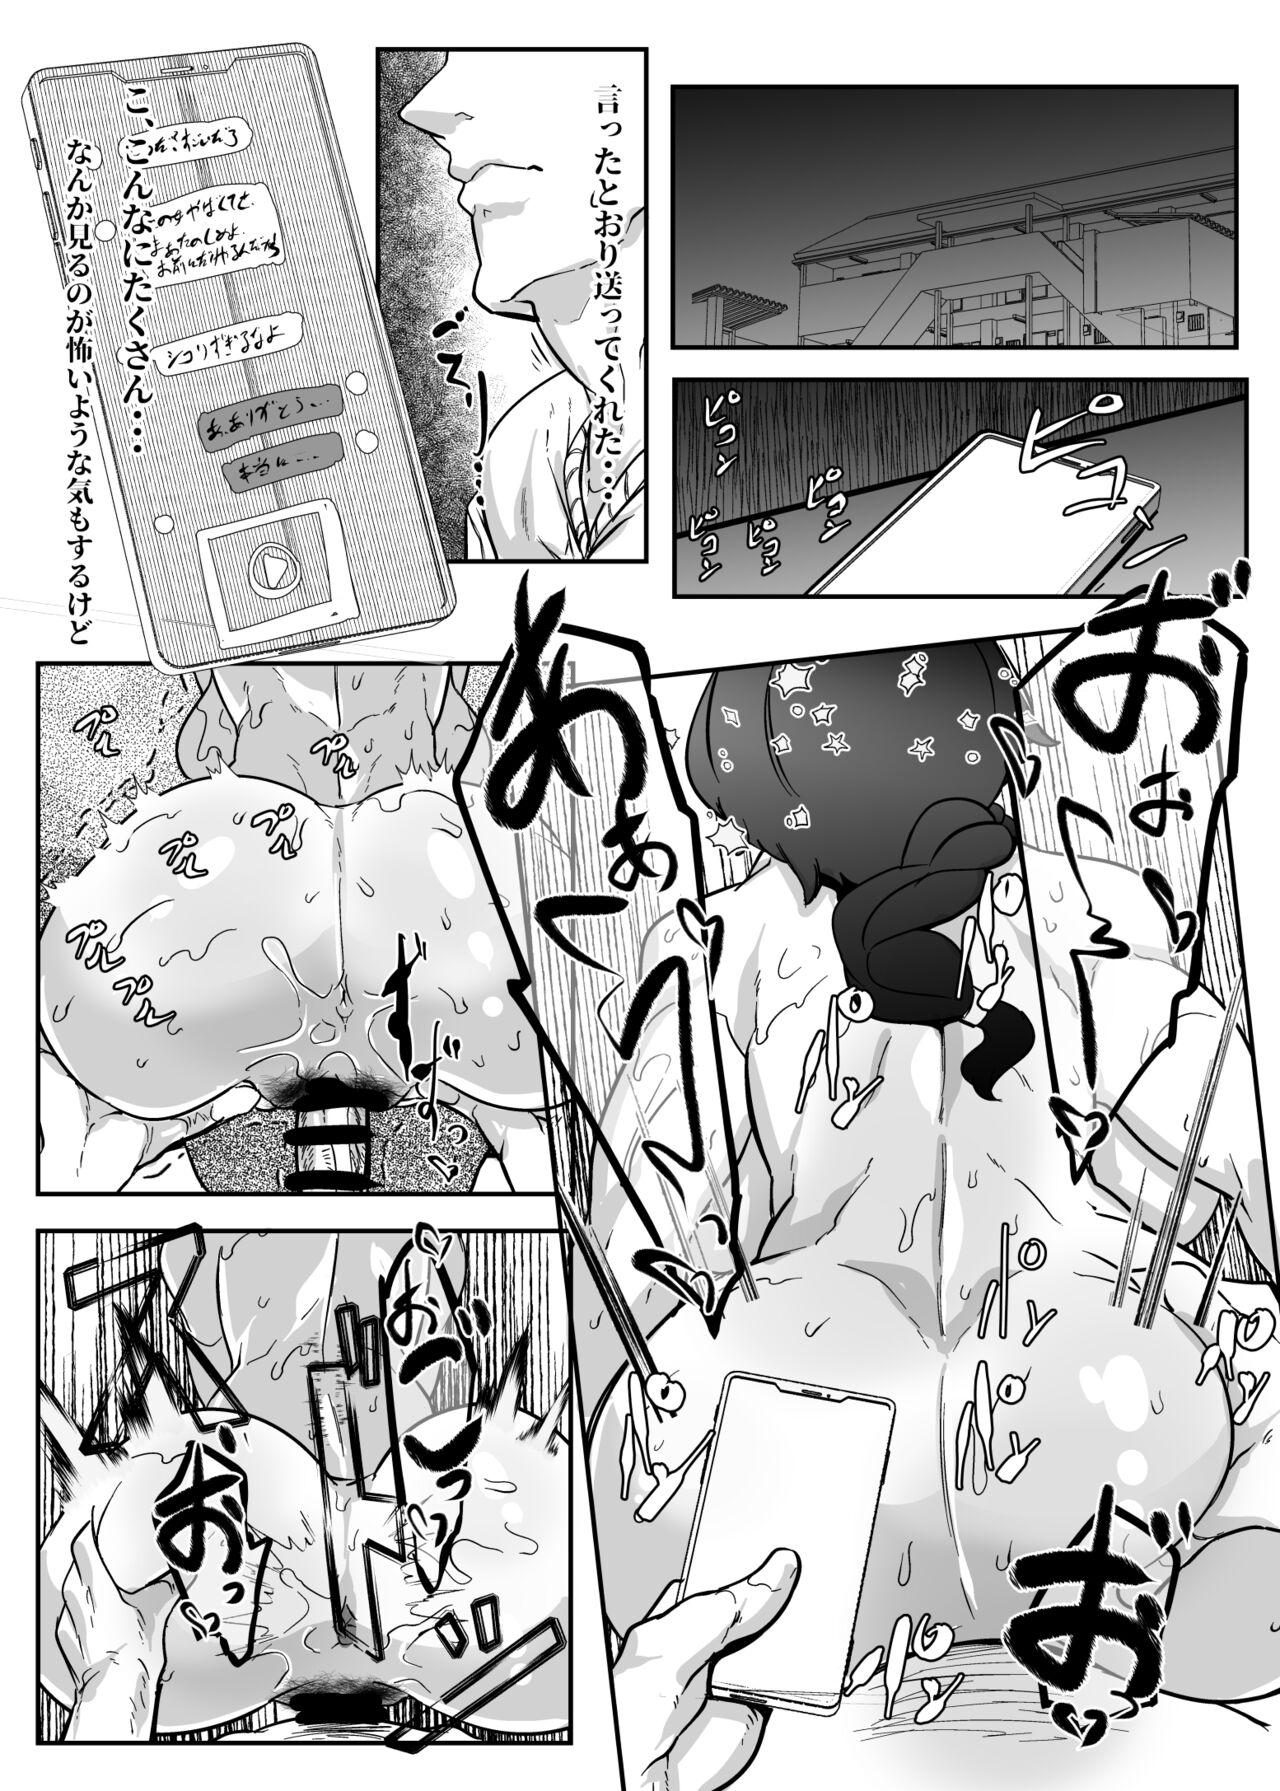 Best Blowjobs Ever Kininaru Anoko wa Tomodachi no Nikubenki Manken OtaCir no Megane Jimiko Pauzudo - Page 5